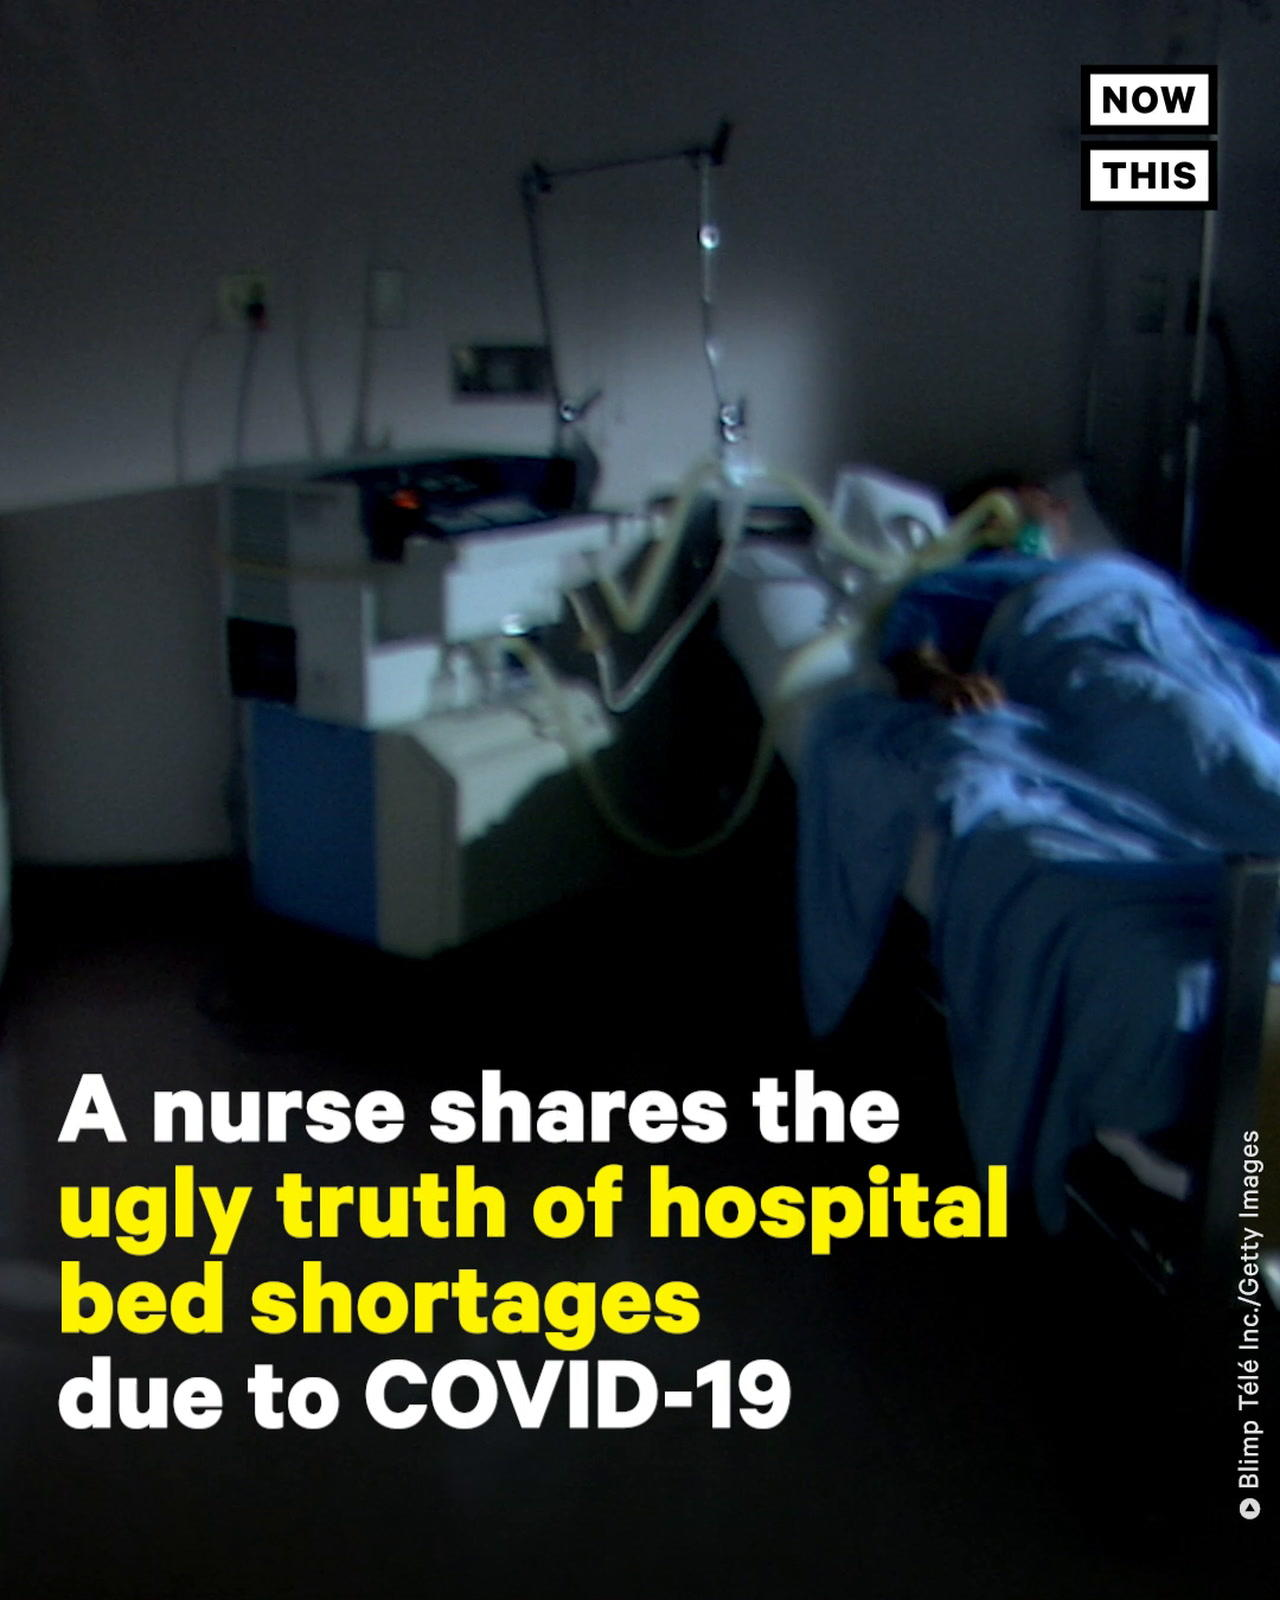 U.S. Hospitals Head Toward Crisis as COVID Surges, Nurse Warns